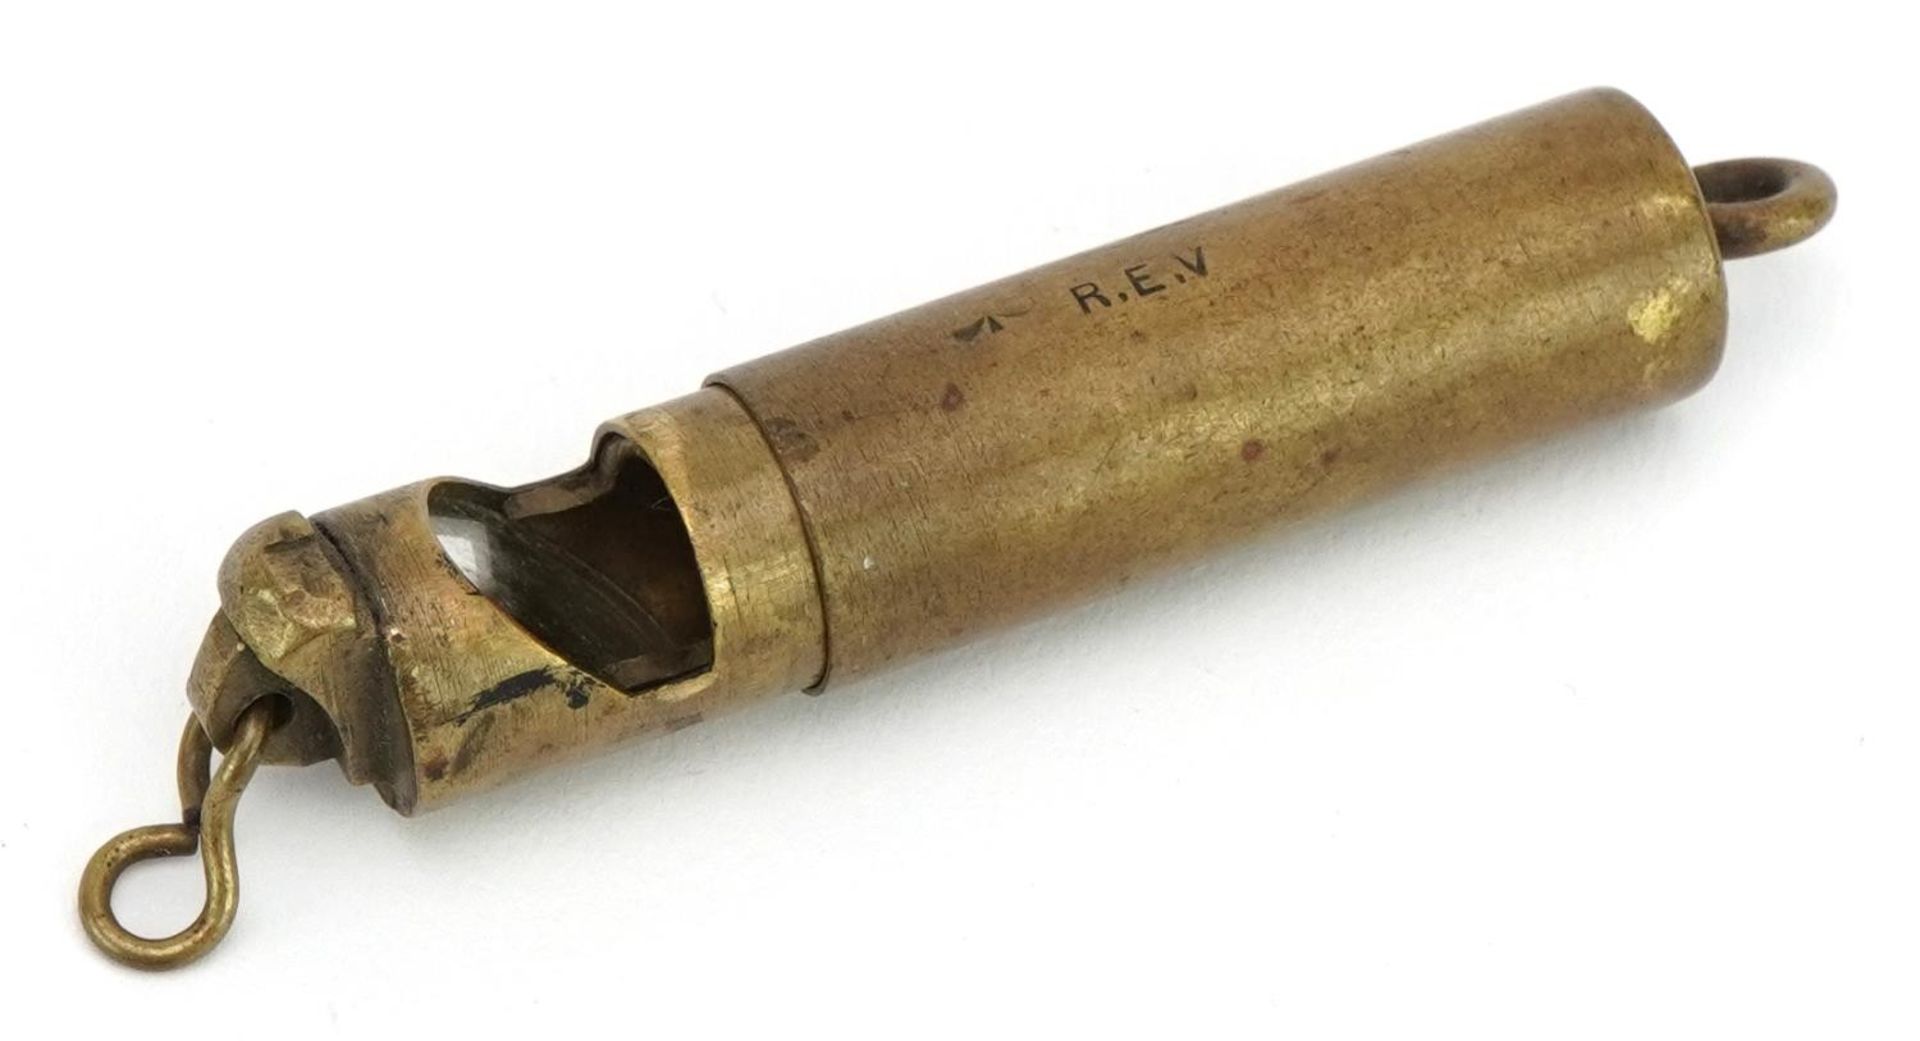 Military interest brass pocket sextant, 5.5cm in length